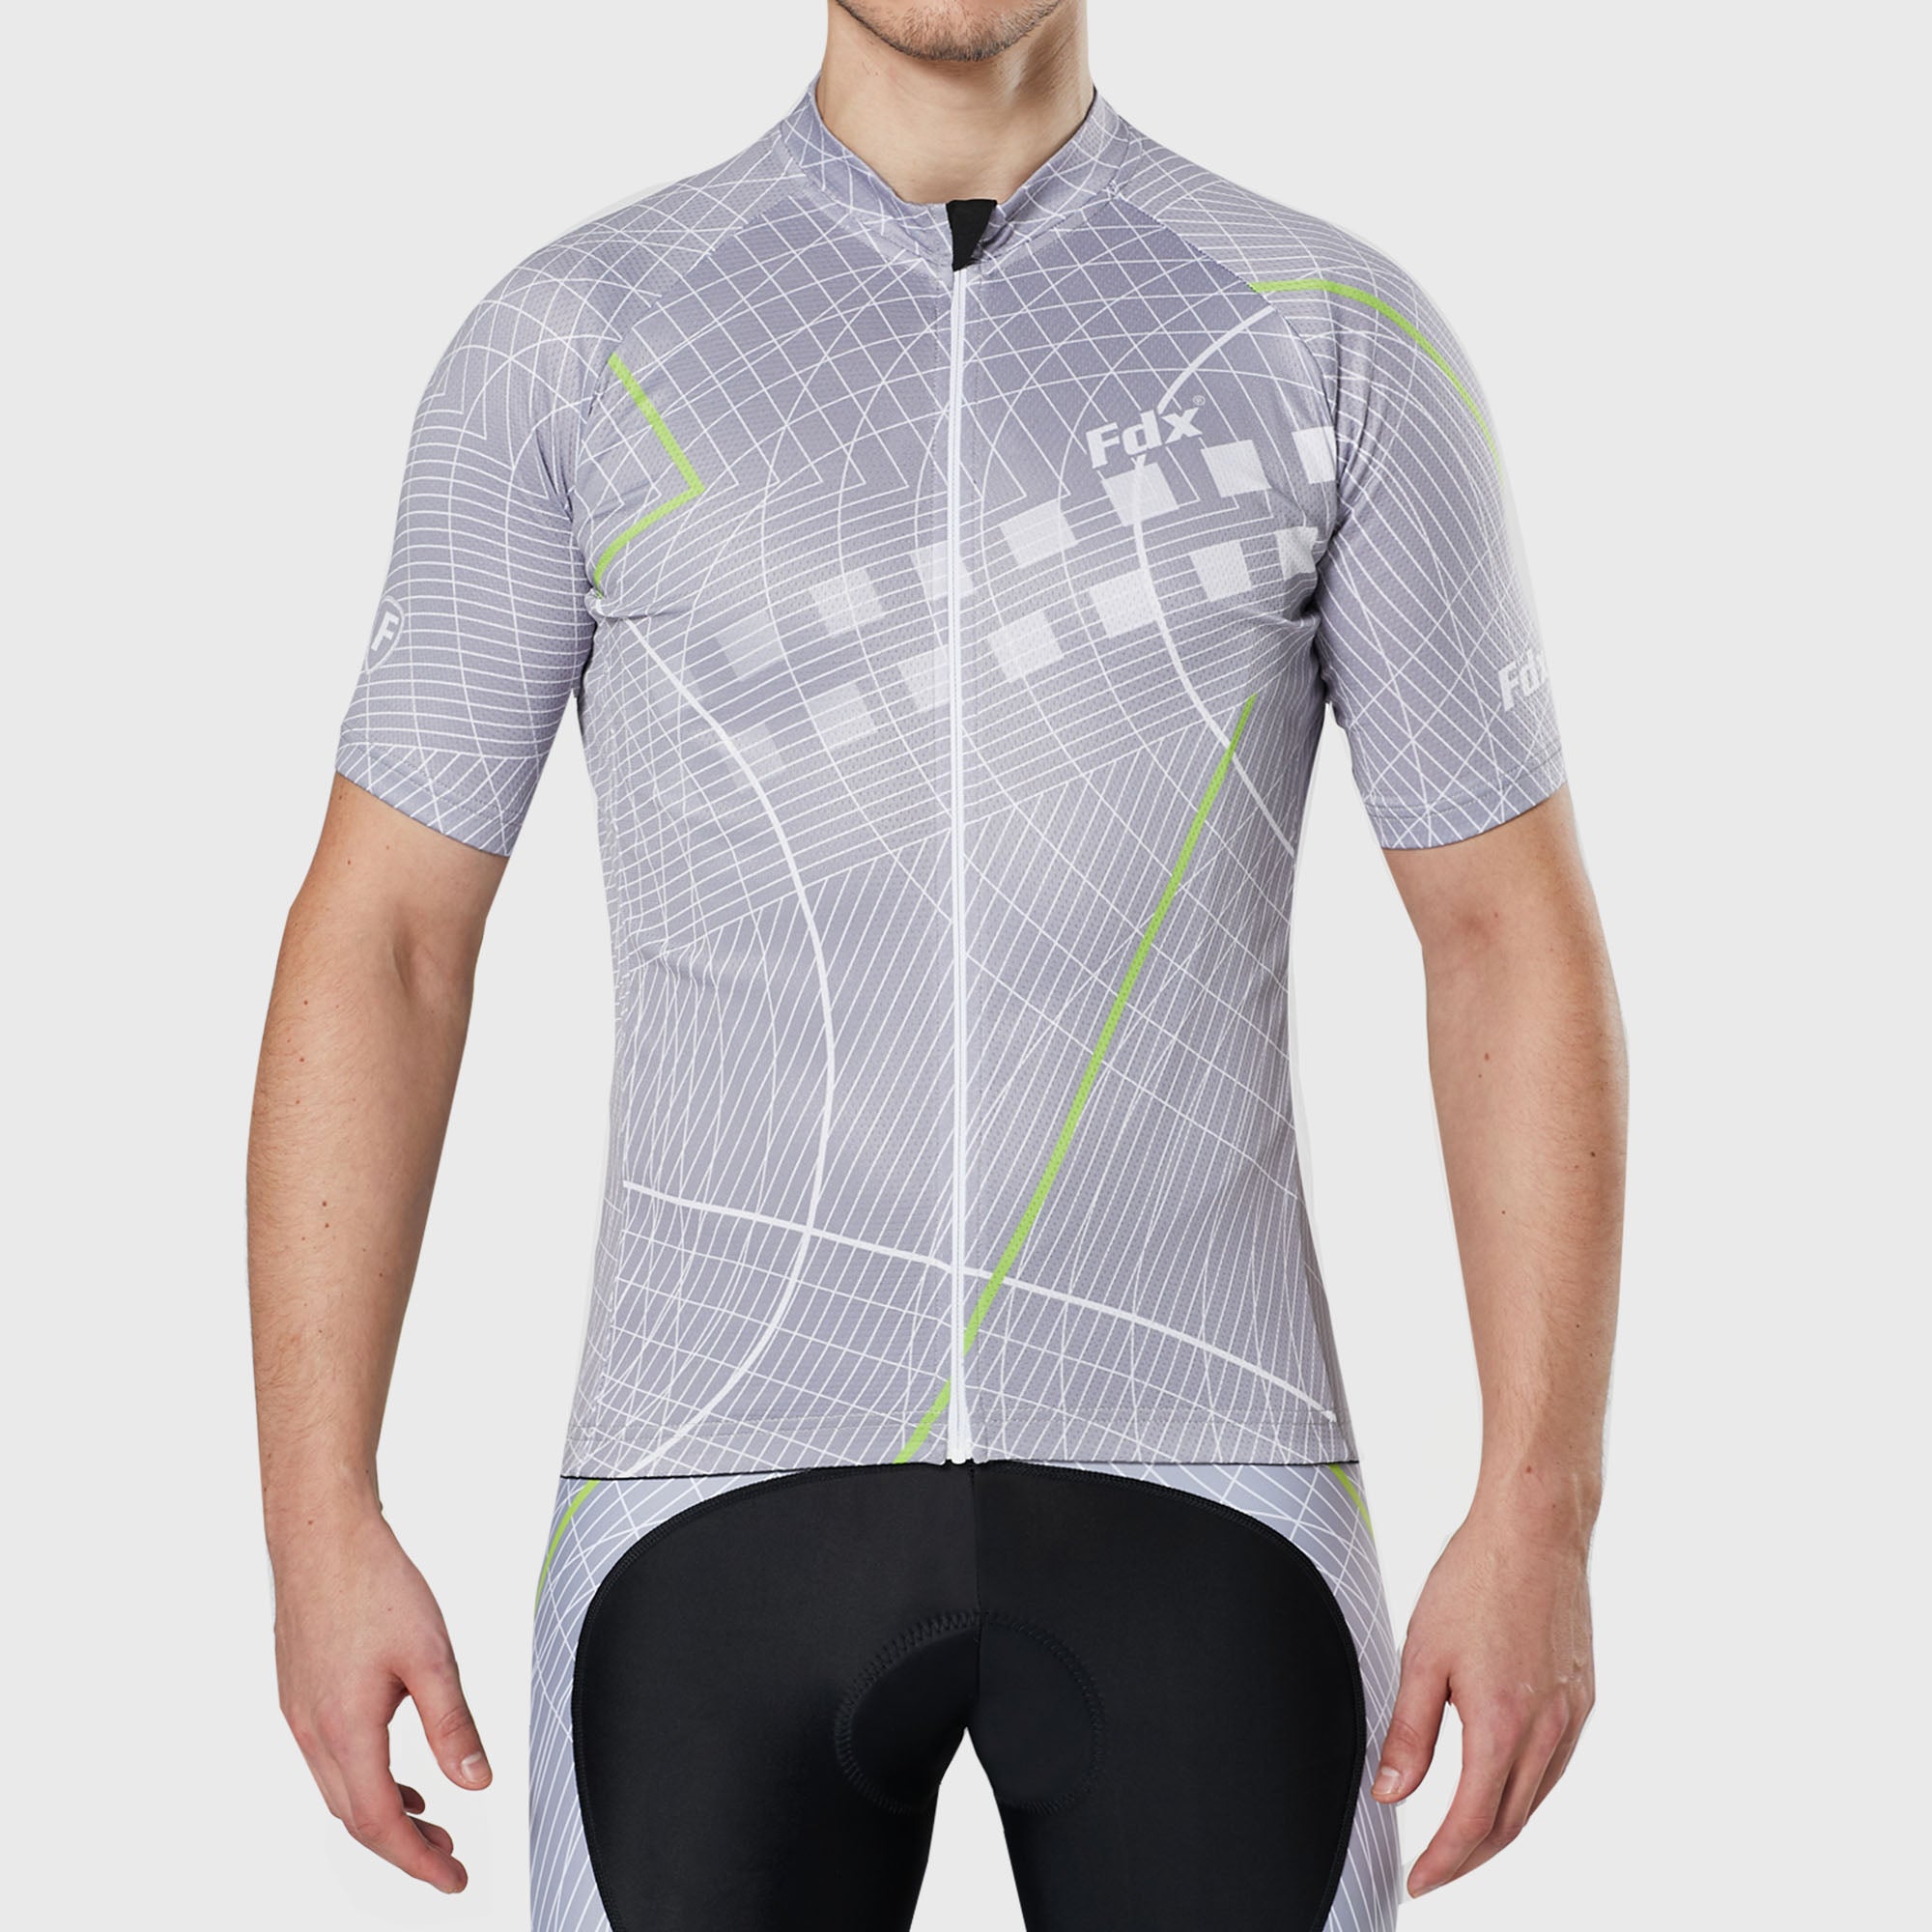 Fdx Mens Grey Short Sleeve Cycling Jersey for Summer Best Road Bike Wear Top Light Weight, Full Zipper, Pockets & Hi-viz Reflectors - Classic II